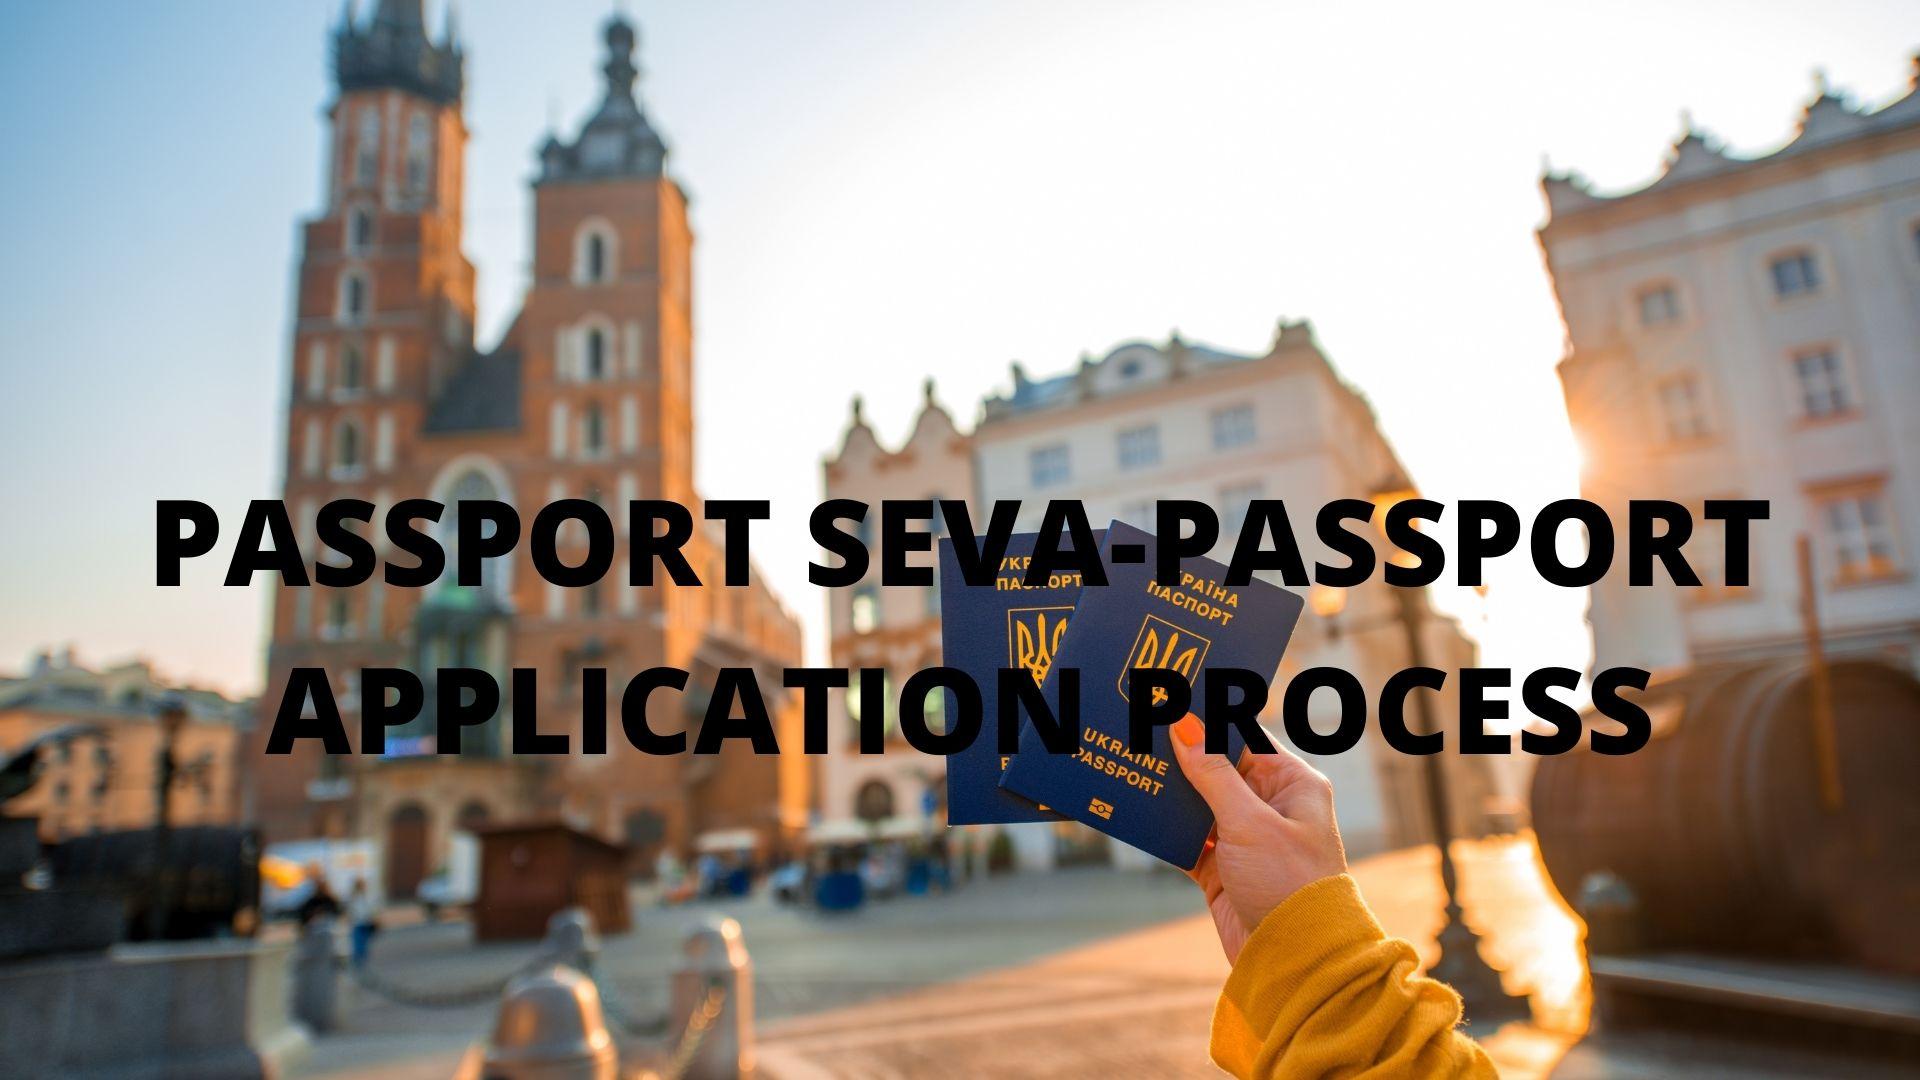 PASSPORT SEVA PASSPORT APPLICATION PROCESS